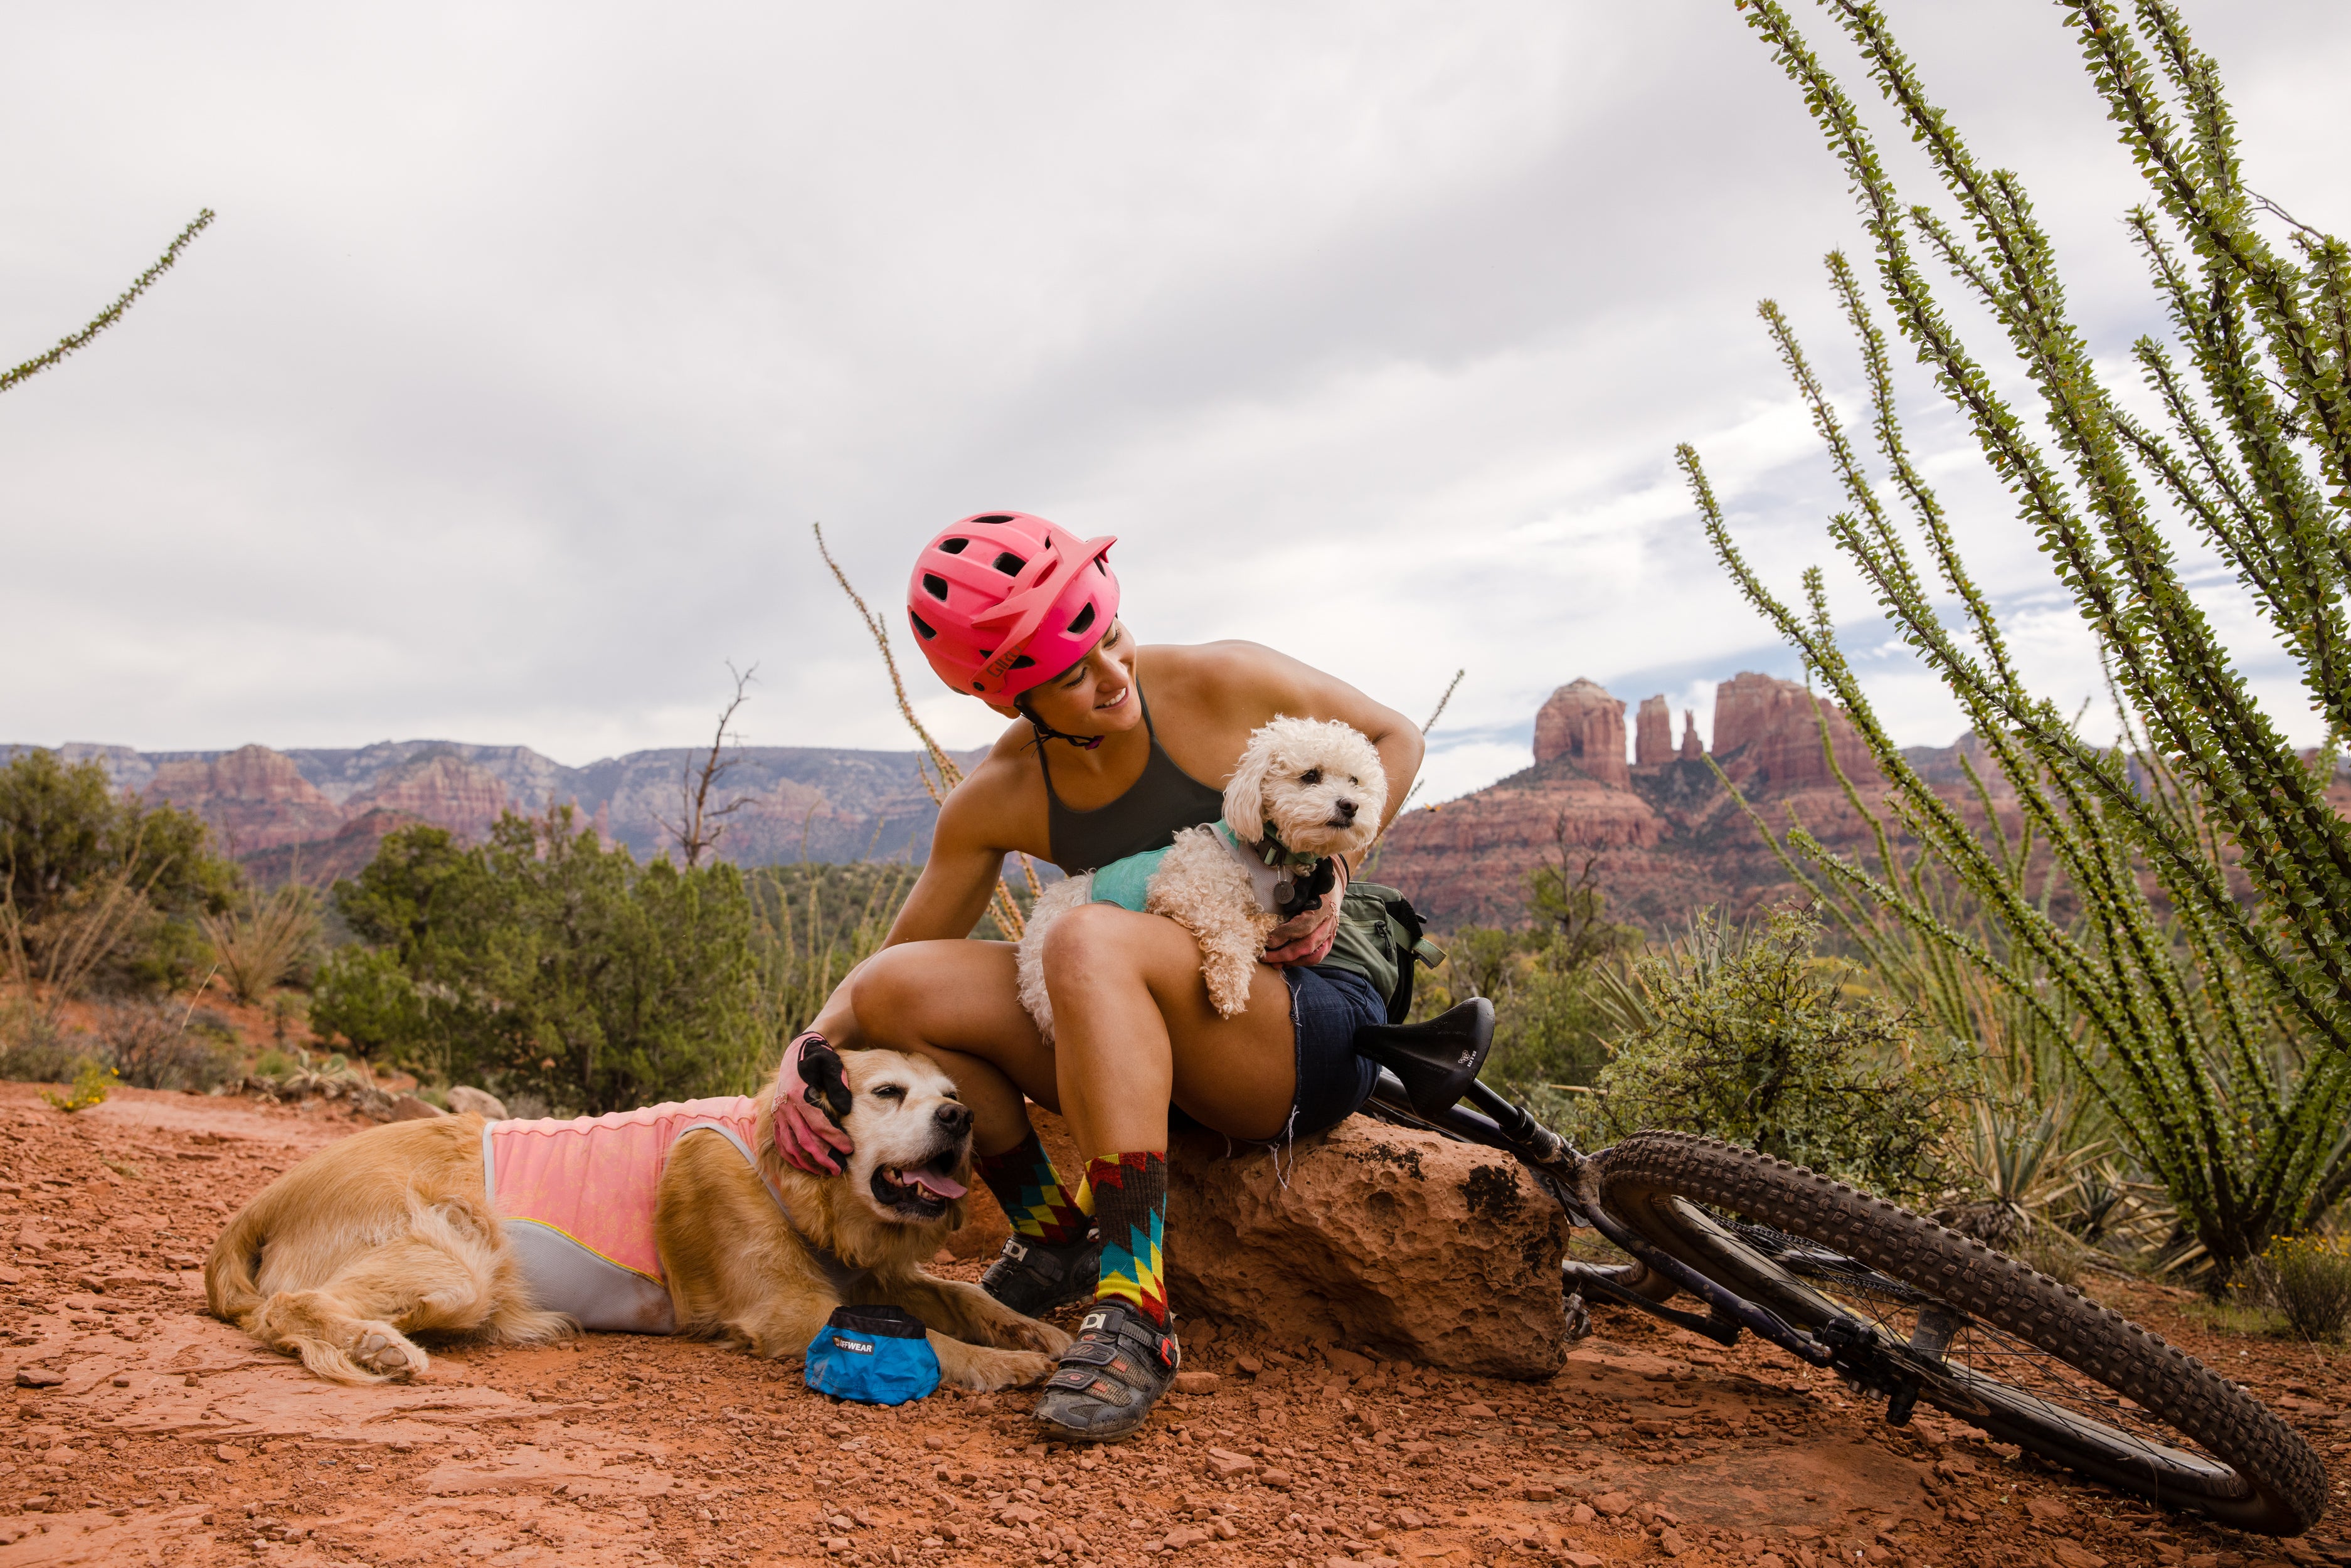 Abby, Kona, and Mochi sitting and taking a break from mountain biking